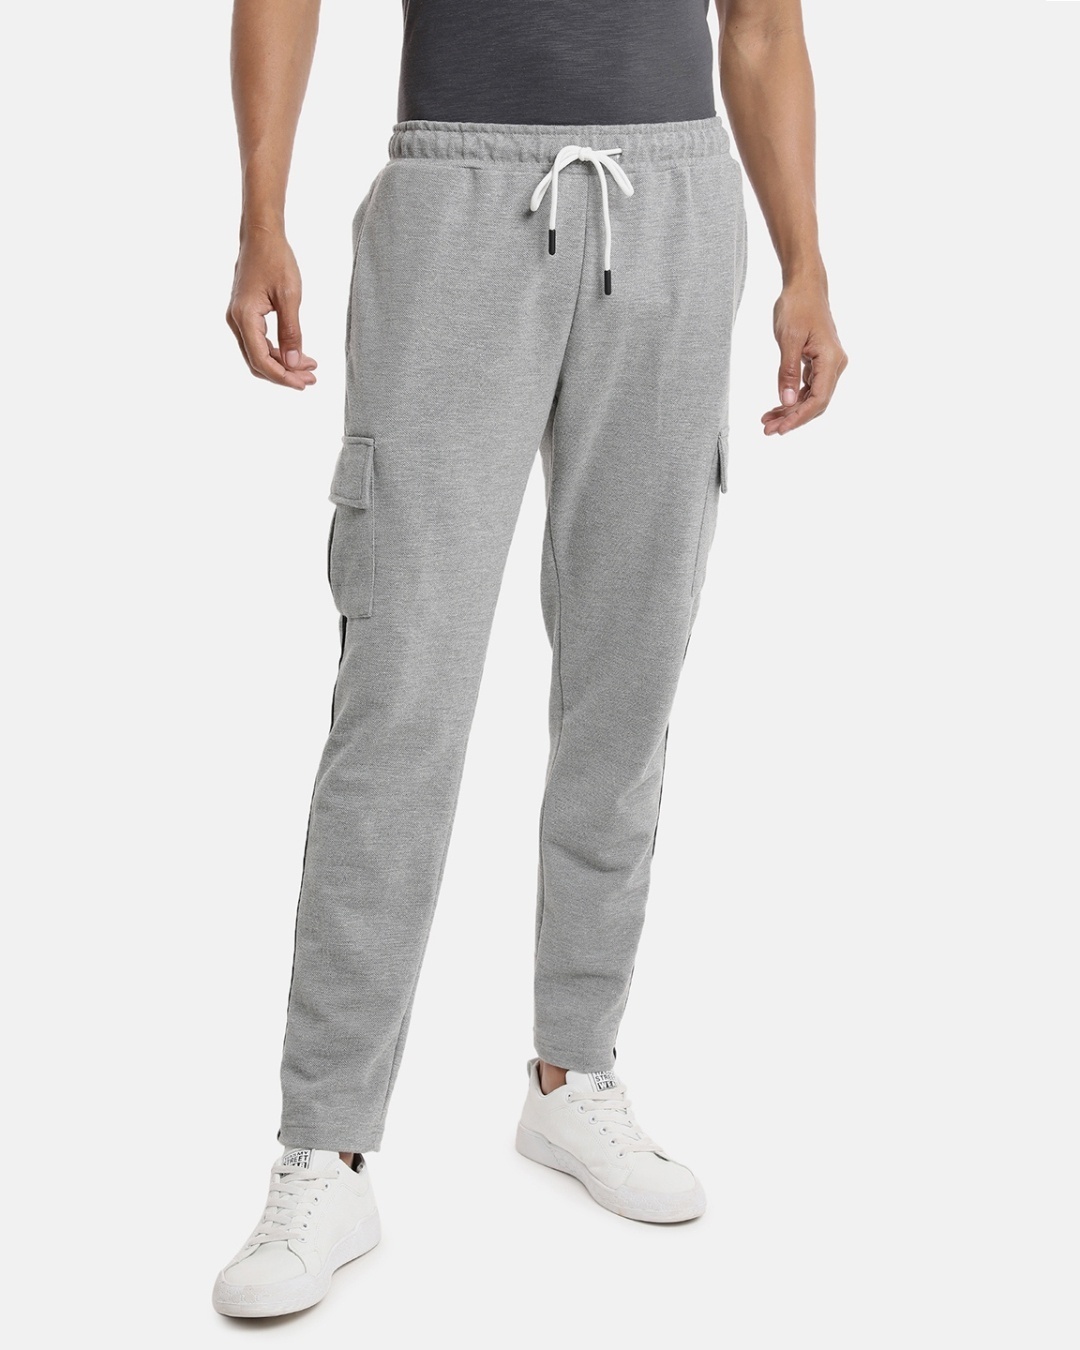 Buy Men's Grey Slim Fit Cotton Track Pants for Men Grey Online at Bewakoof